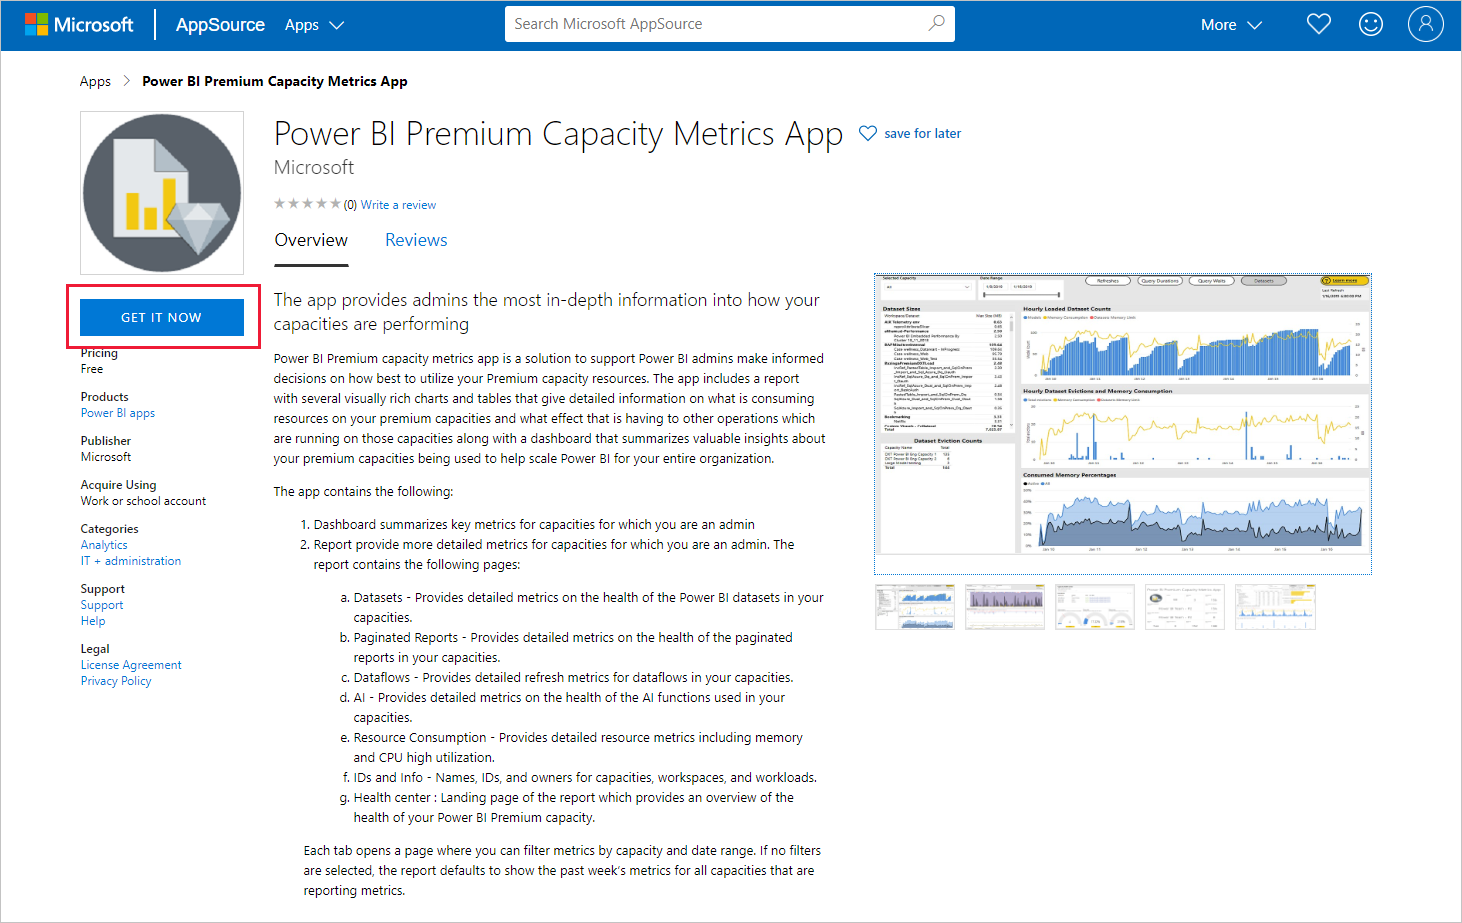 Screenshot of the Power BI Premium Capacity Metrics App get it now page.